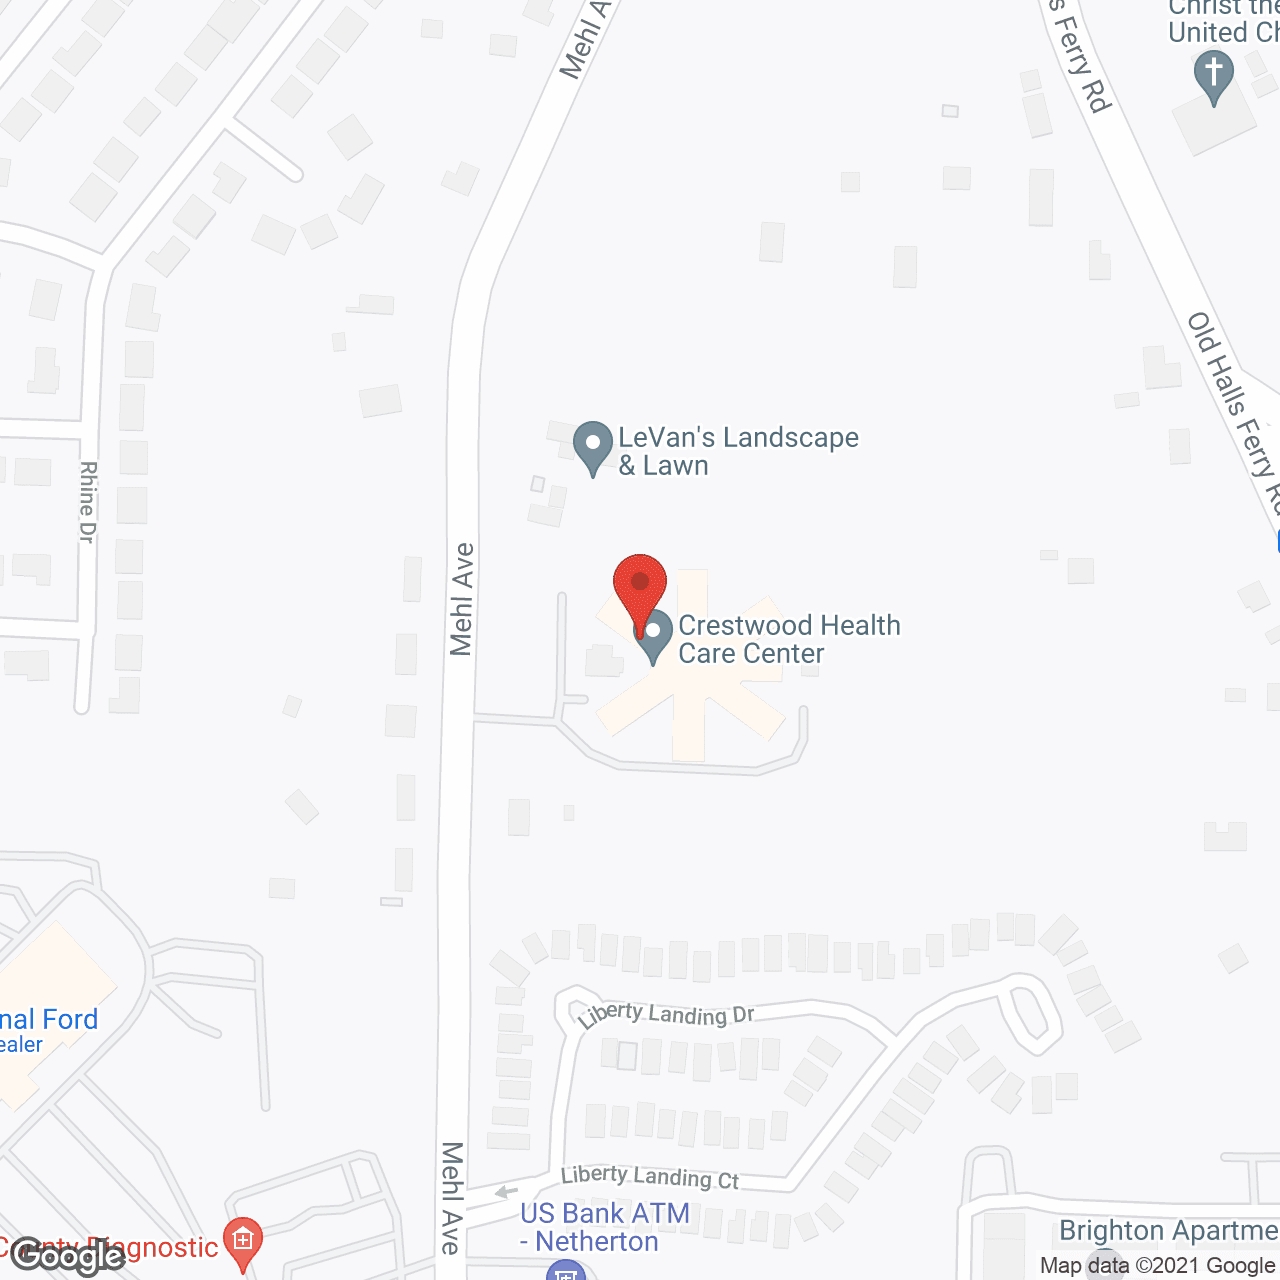 Crestwood Health Care Center, L.L.C. in google map